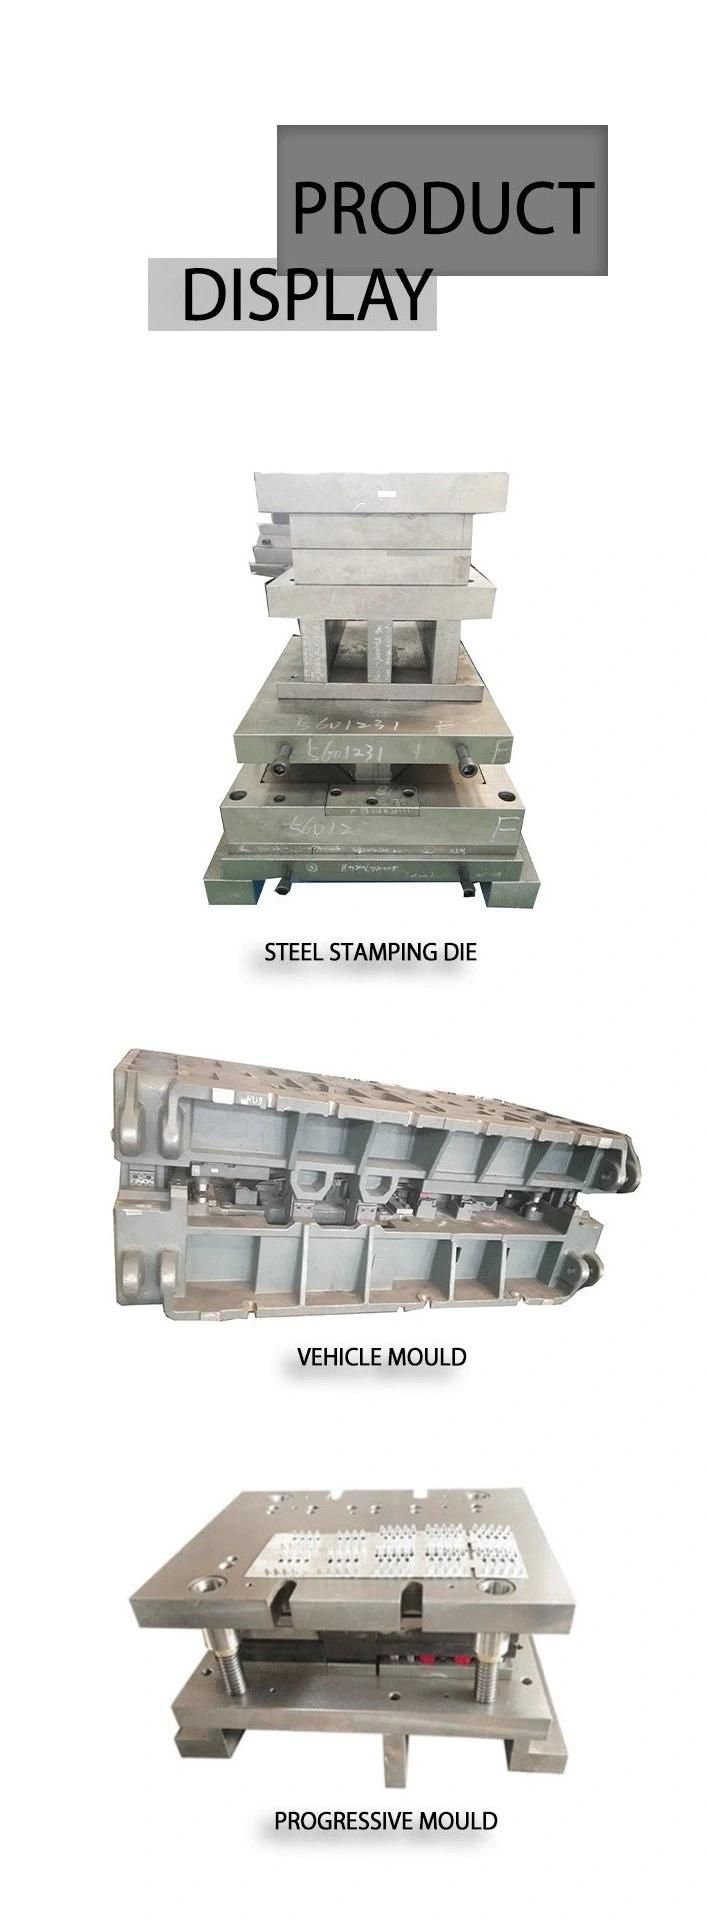 China OEM Gray Iron Casting Bed CNC Milling Carrying Bodies Machine Base Machine Plat Machine Tool Bed